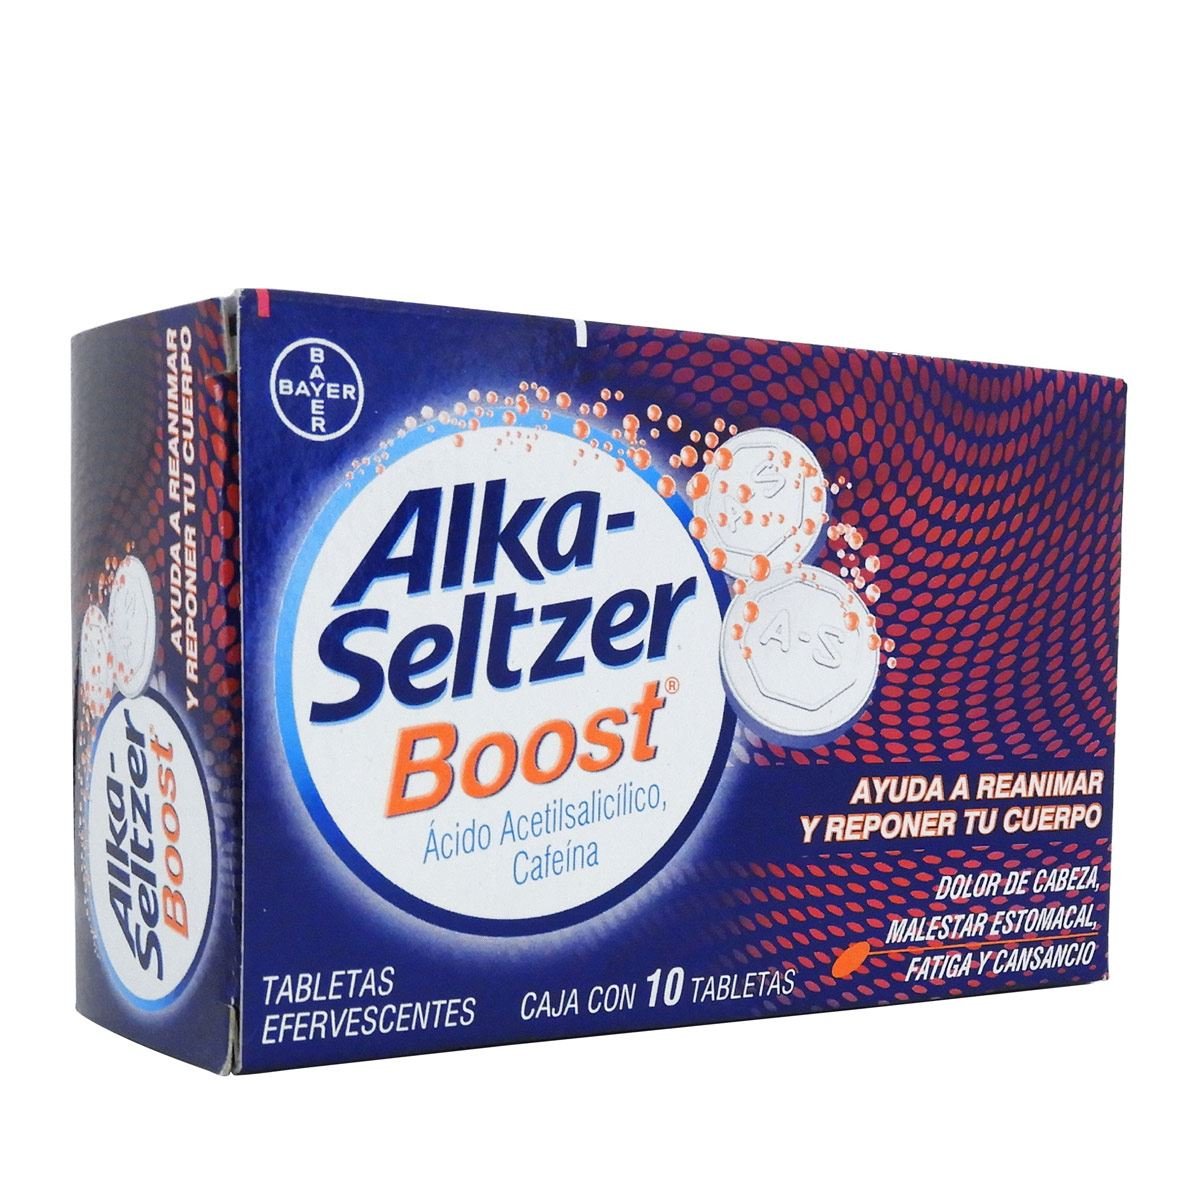 Alka Seltzer Boost 10 Tabletas Efervecentes